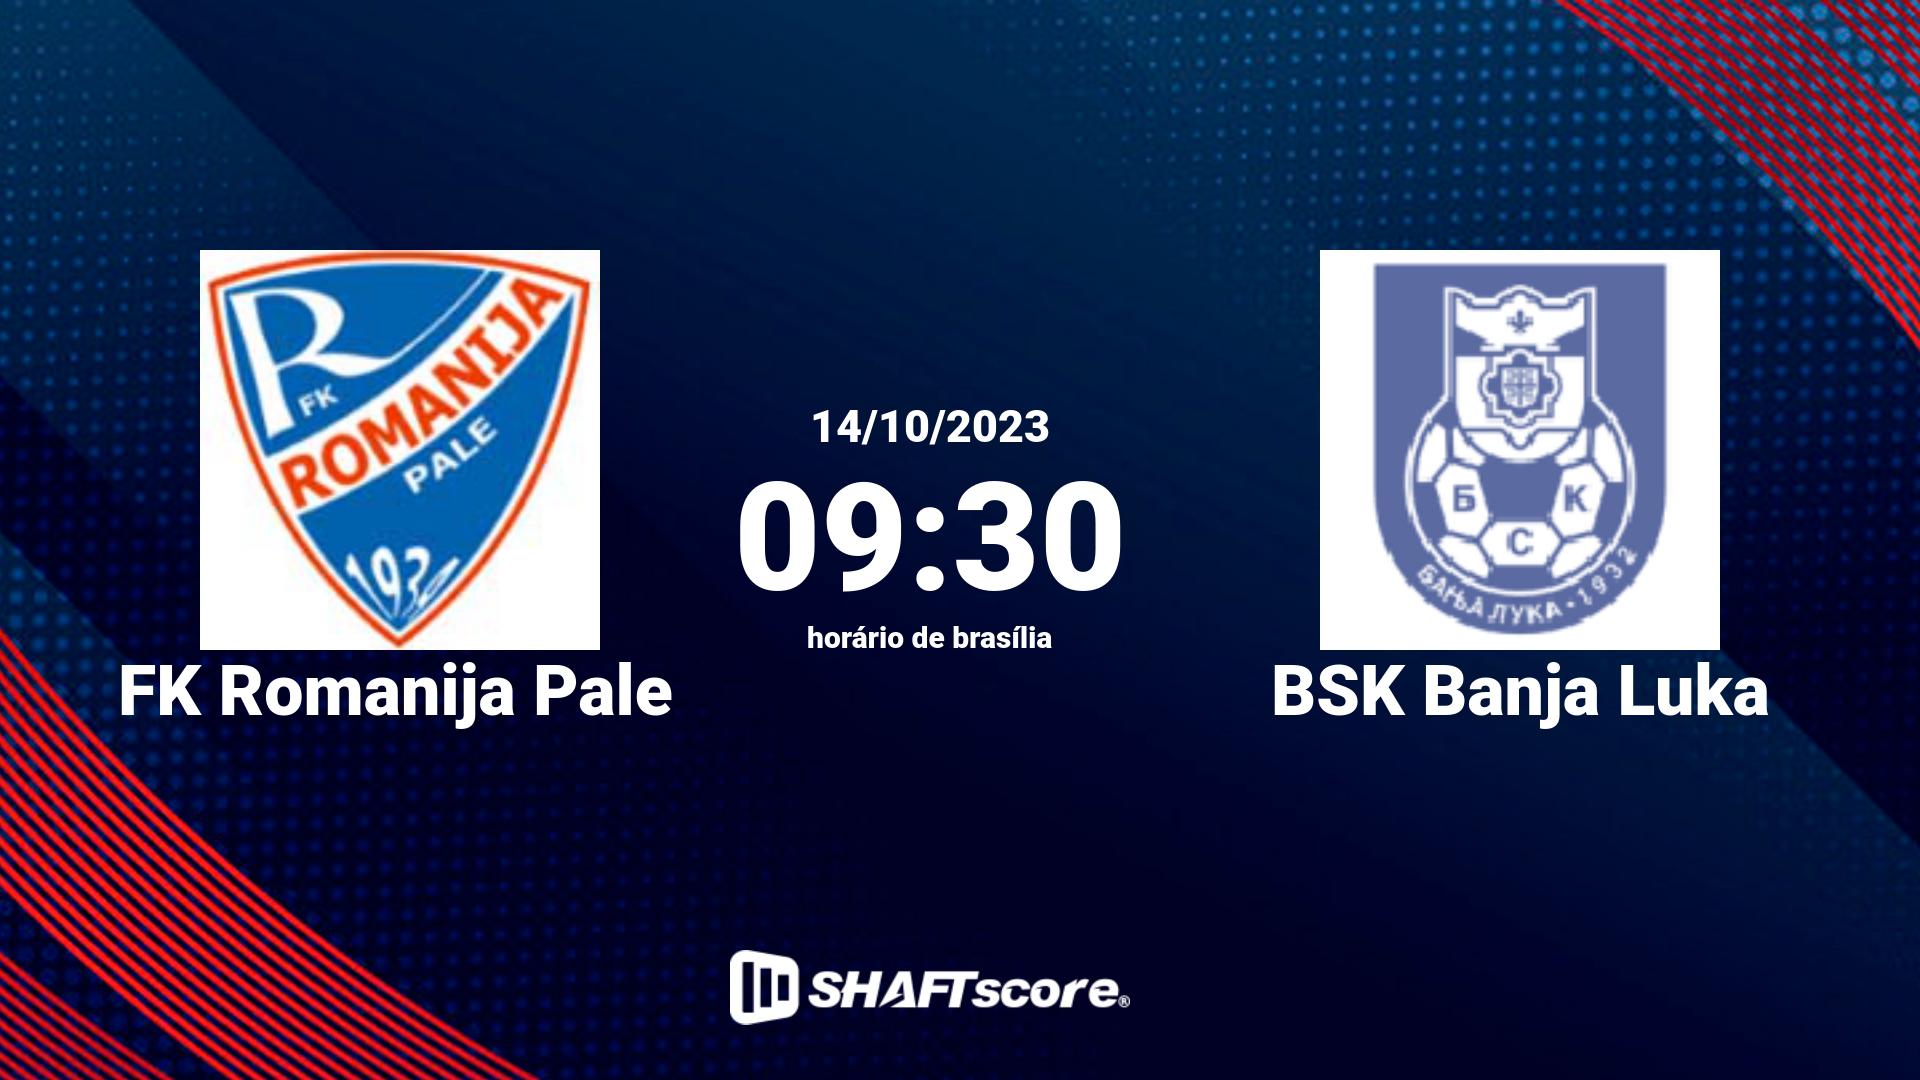 Estatísticas do jogo FK Romanija Pale vs BSK Banja Luka 14.10 09:30